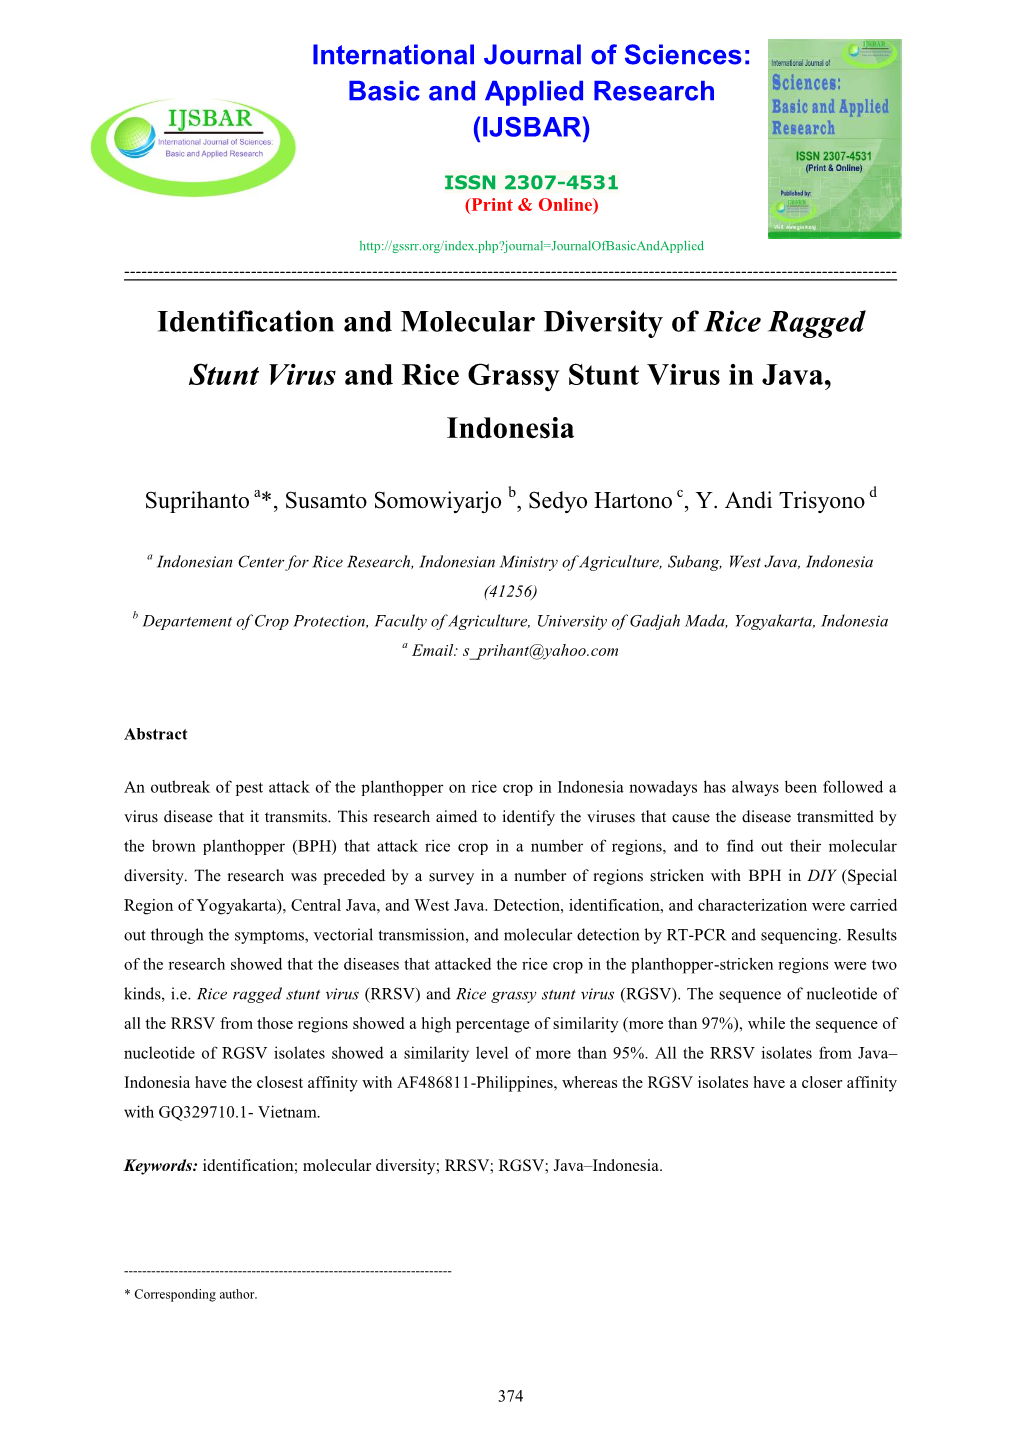 Identification and Molecular Diversity of Rice Ragged Stunt Virus and Rice Grassy Stunt Virus in Java, Indonesia